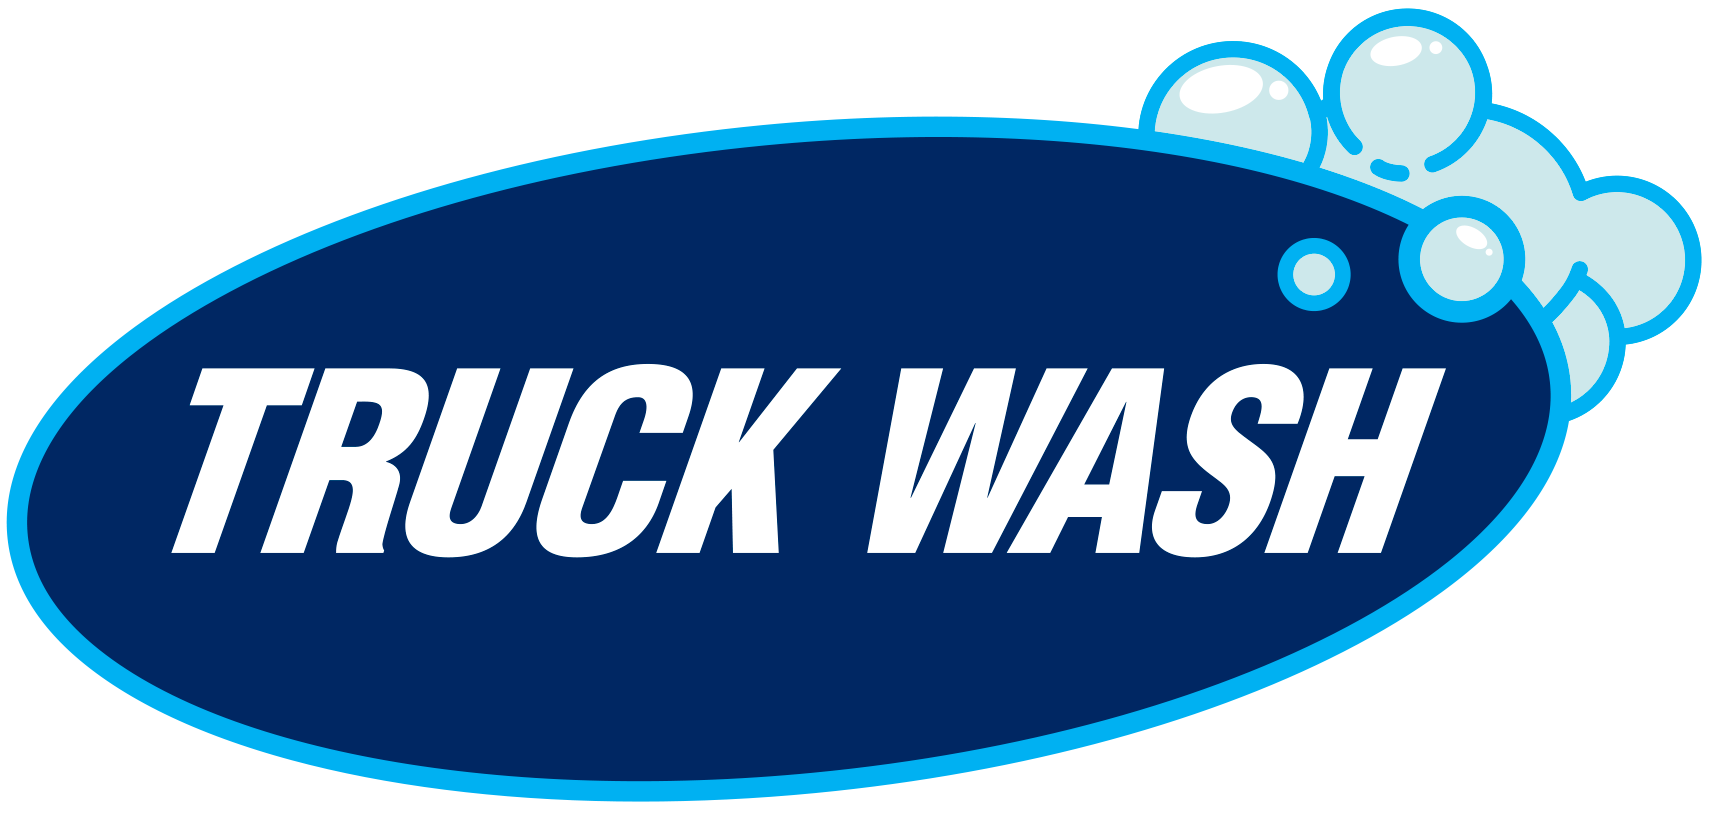 Truck Wash at Love's Travel Stops logo